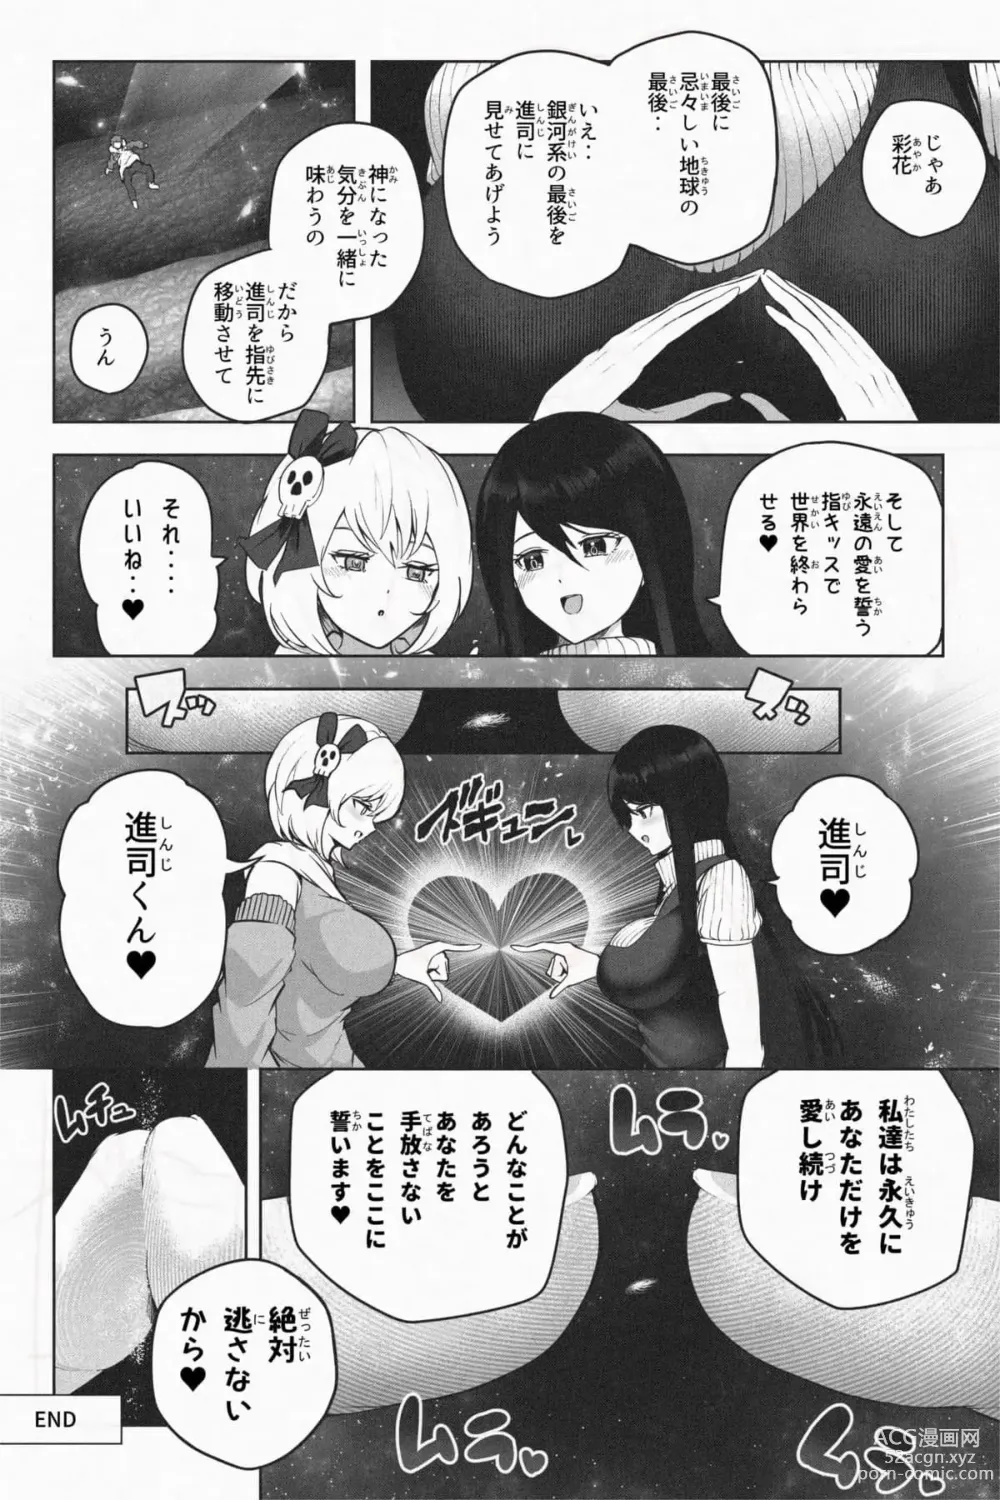 Page 45 of doujinshi Yandere Giga Kanojo 2